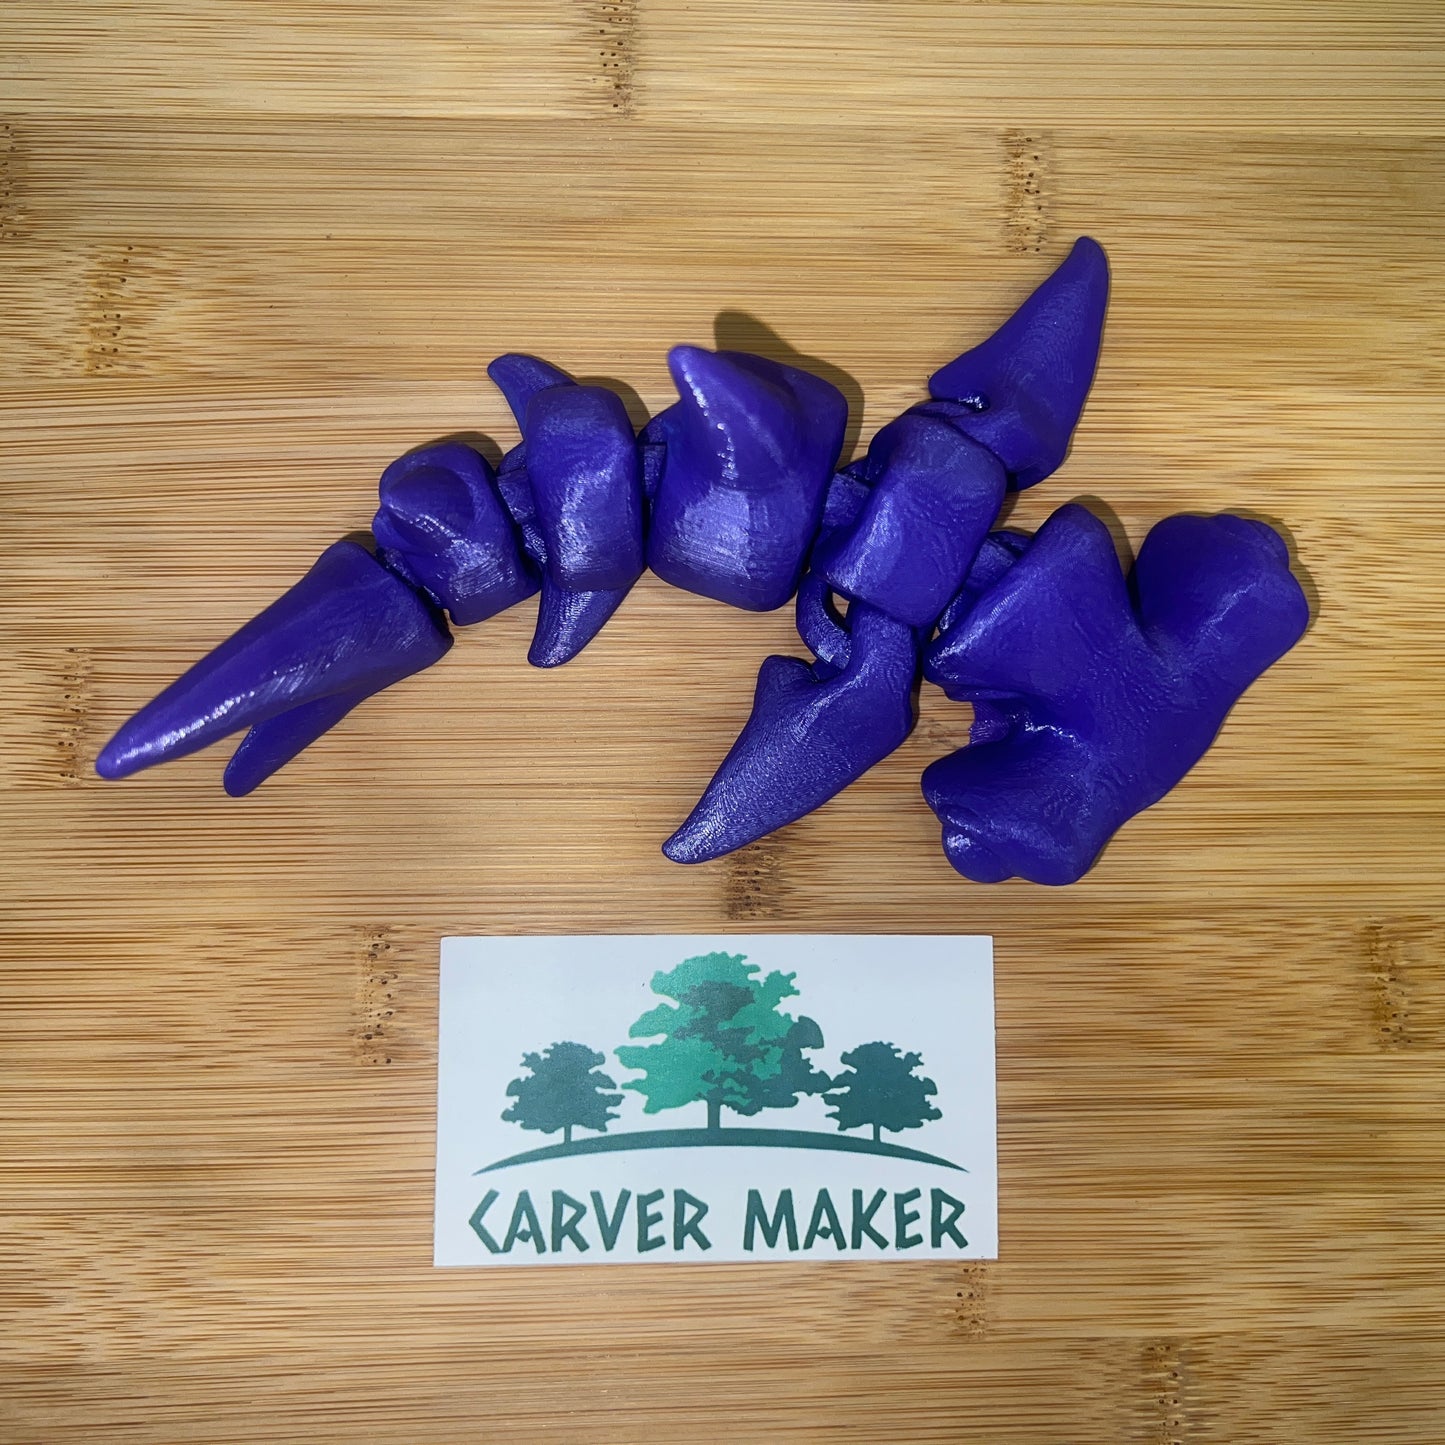 Hammer Head Shark - 3D Printed